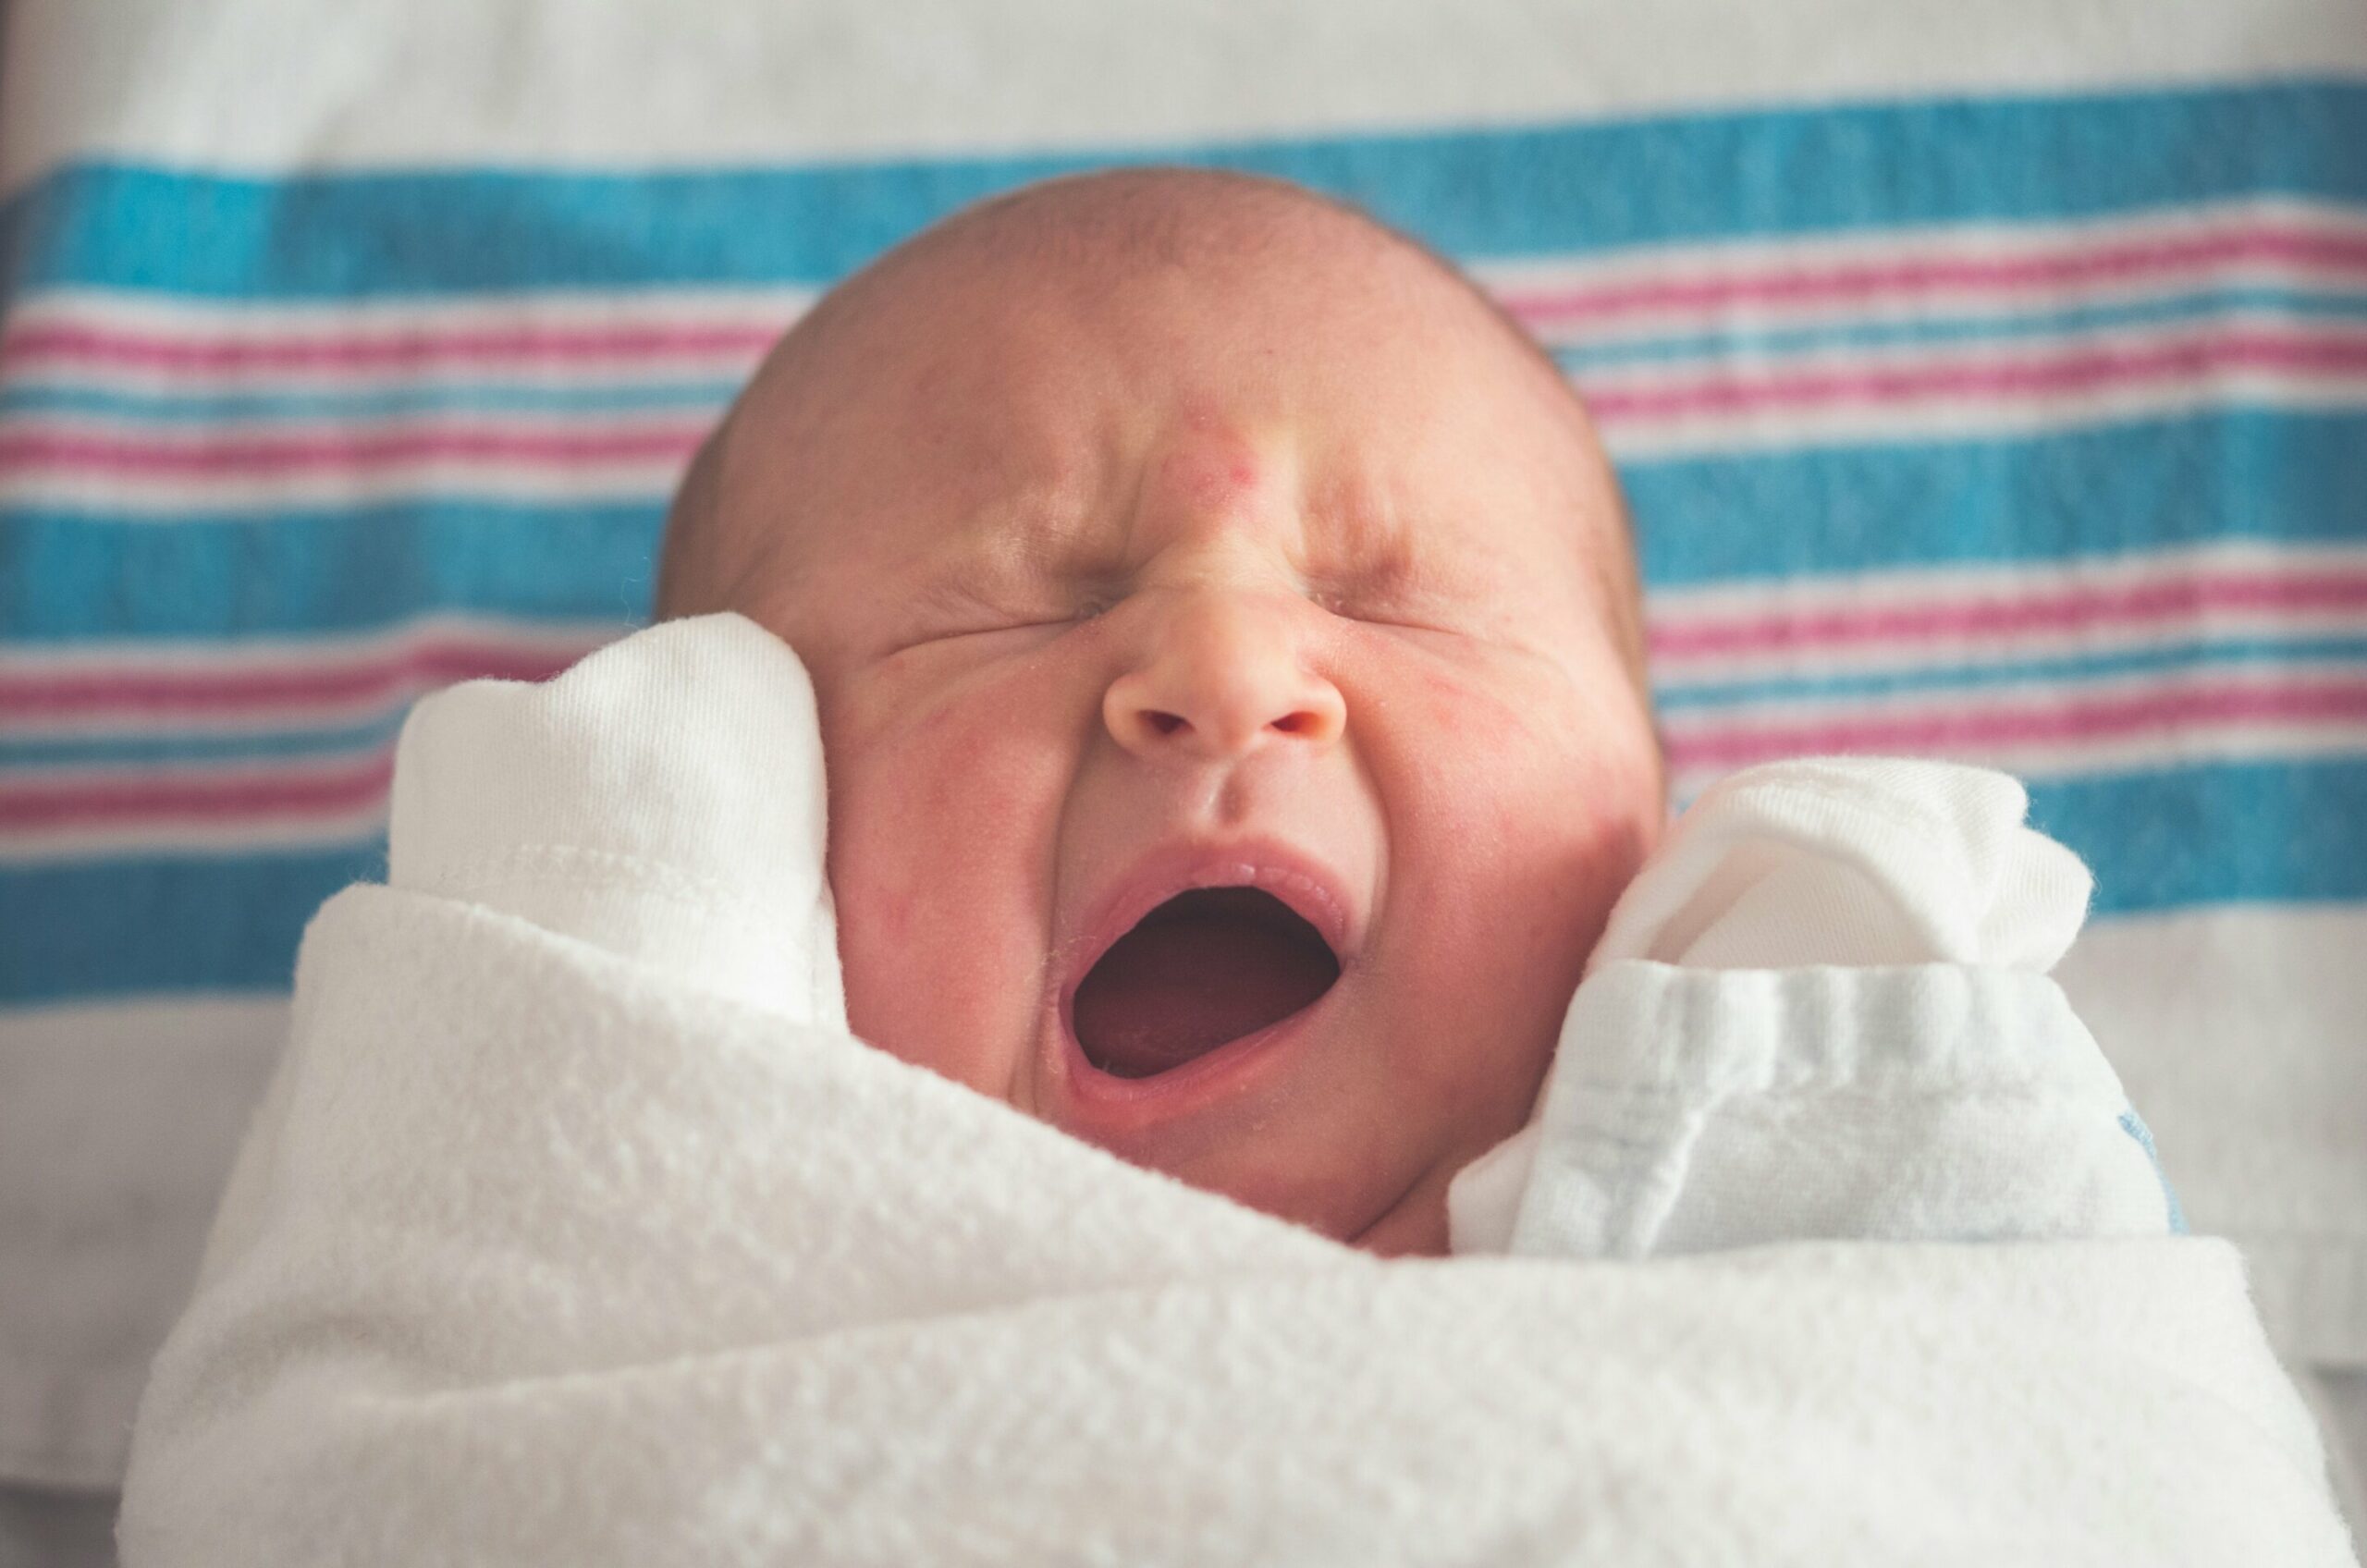 Most sudden infant deaths involve unsafe sleep, report finds